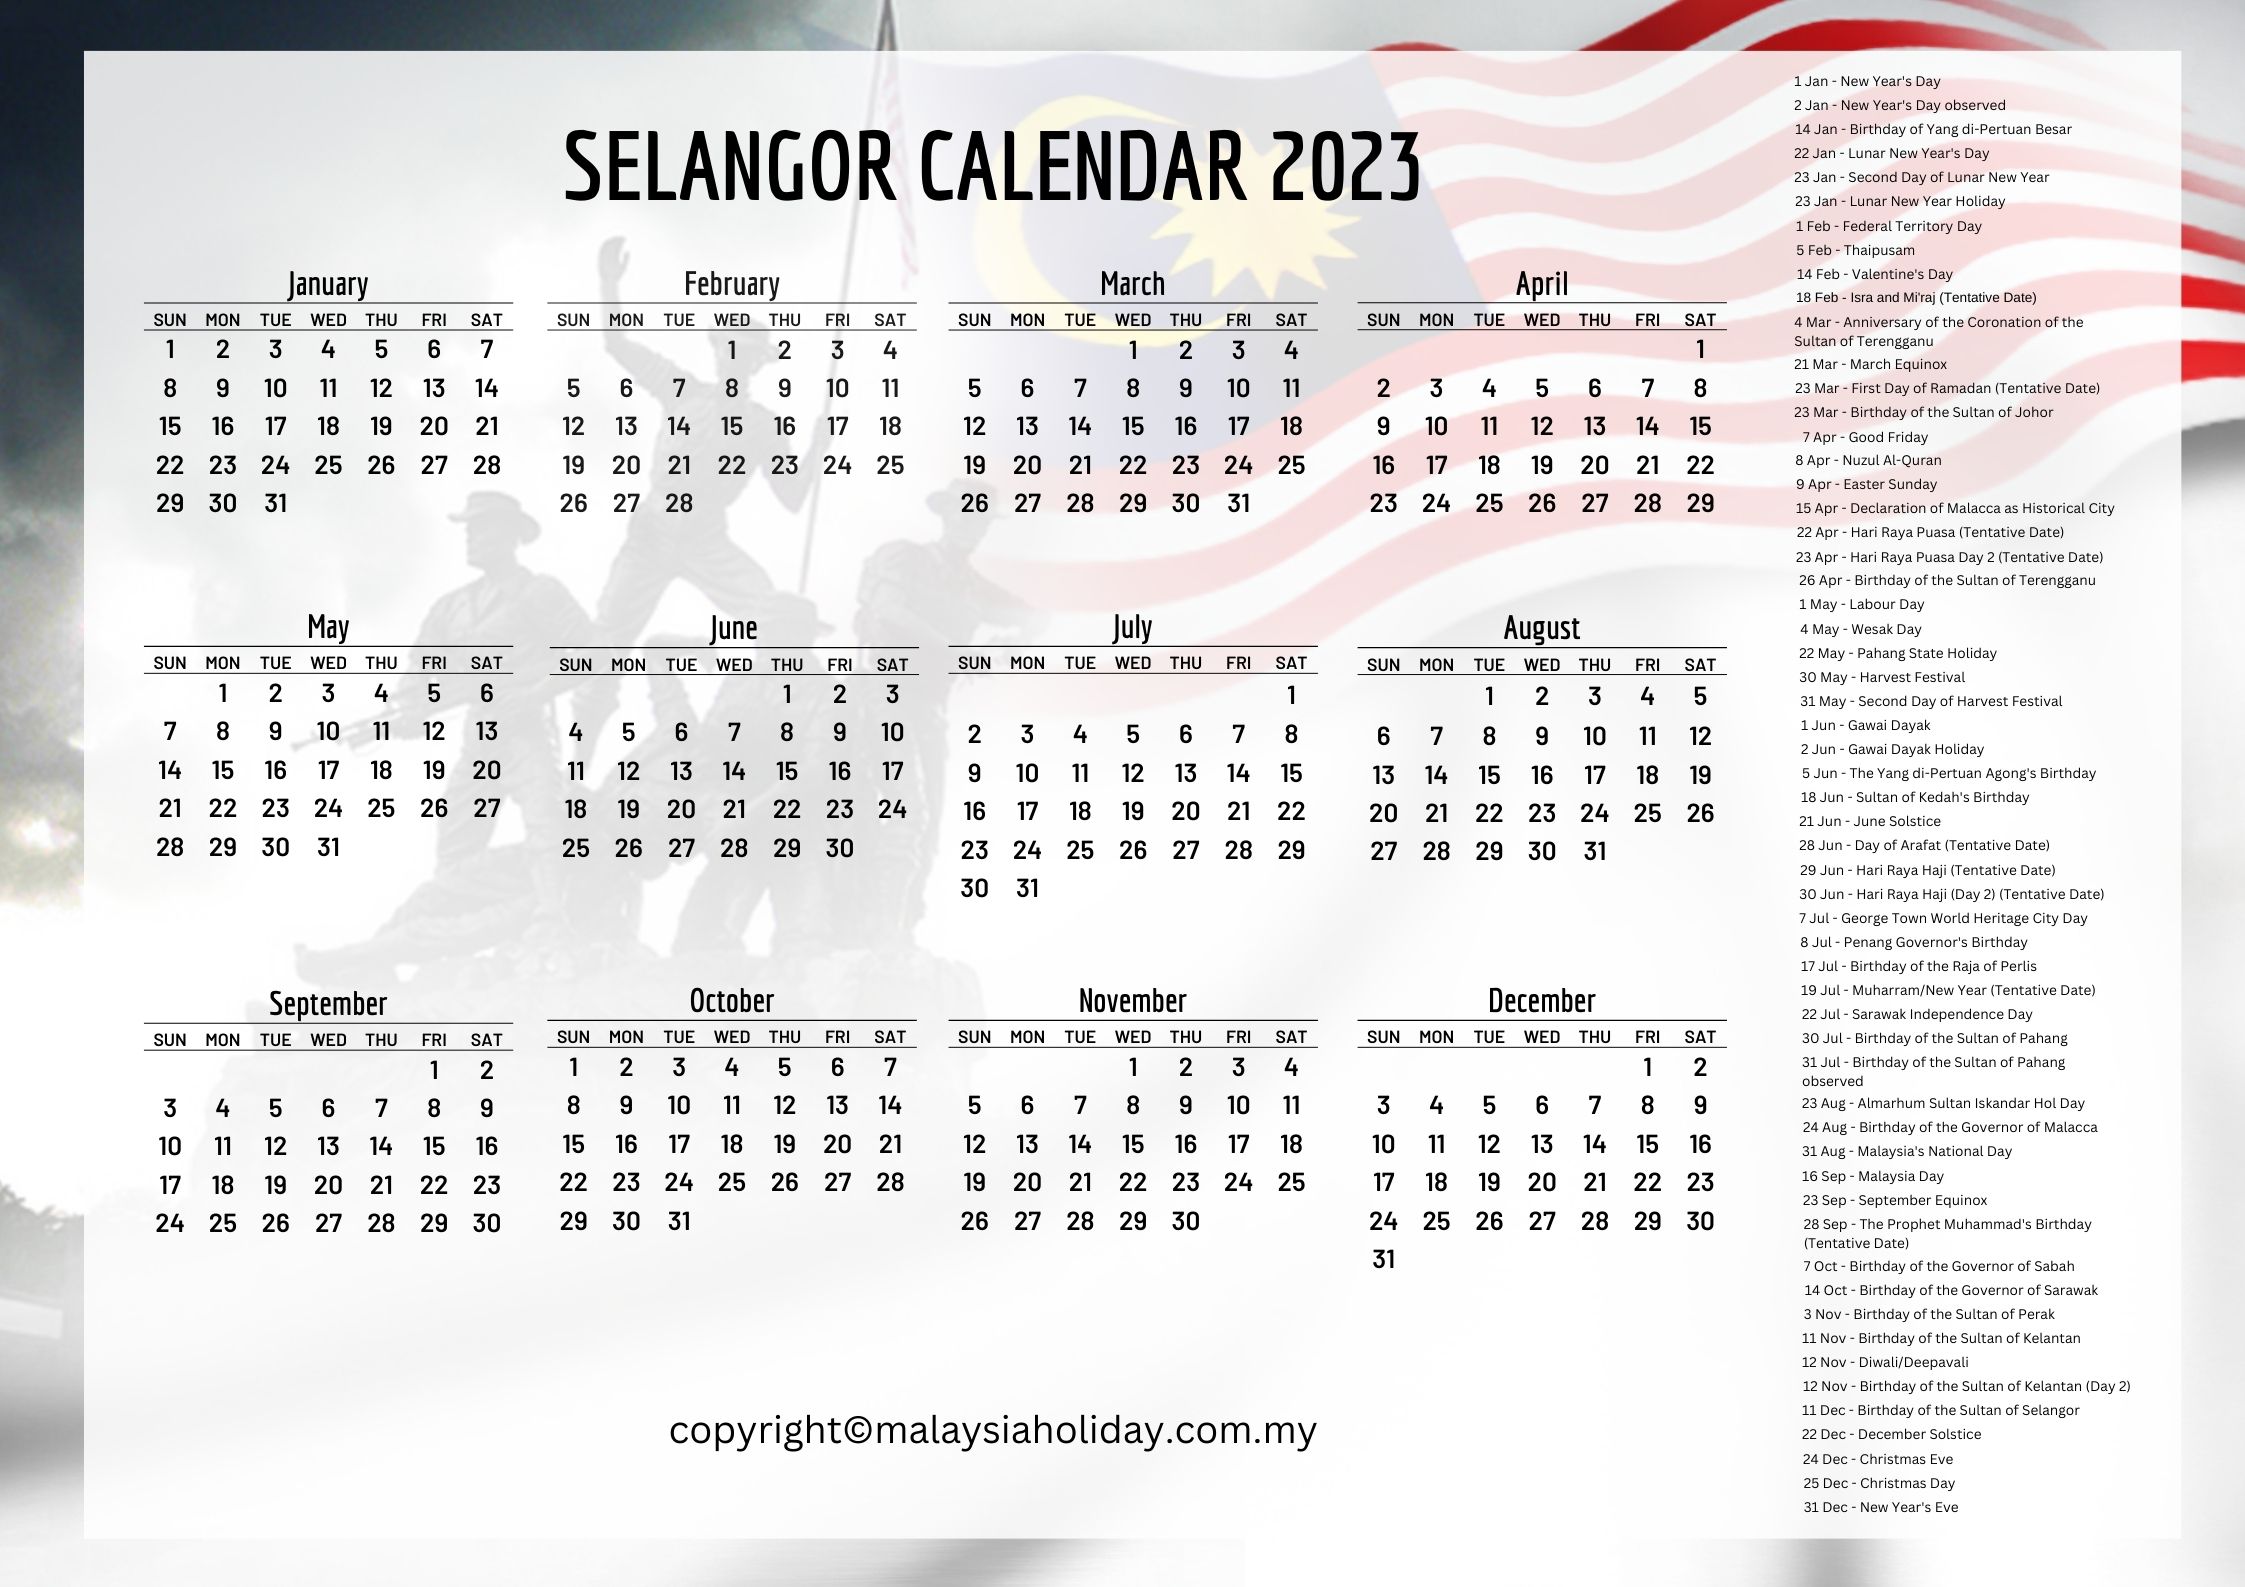 Selangor Public Holidays 2023